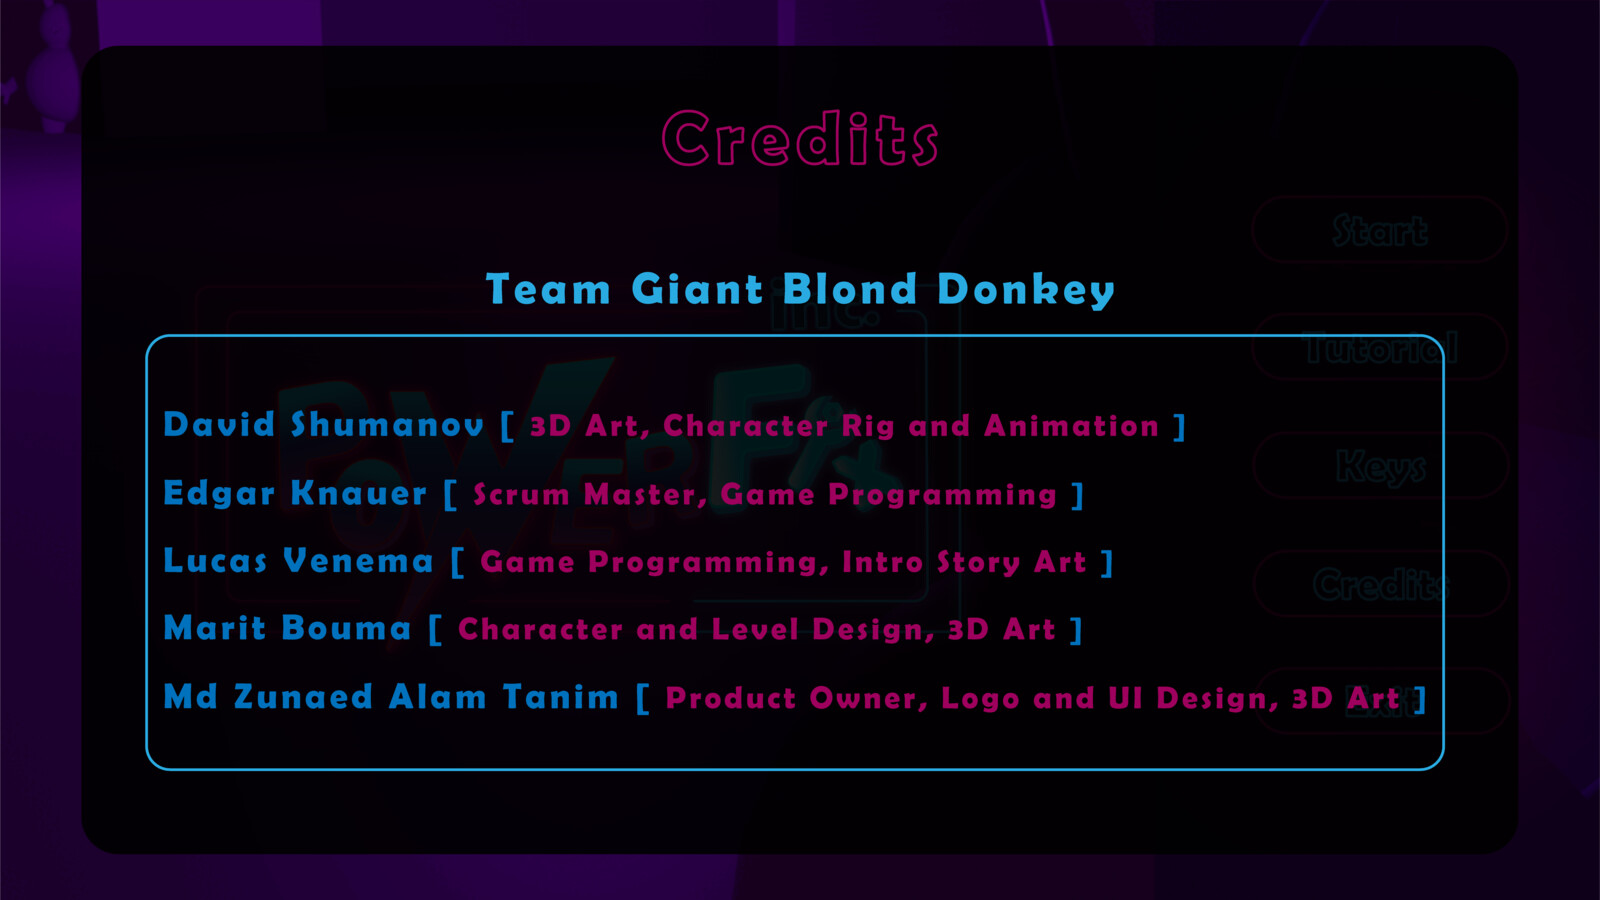 Team Credits PopUp screen in Main Menu